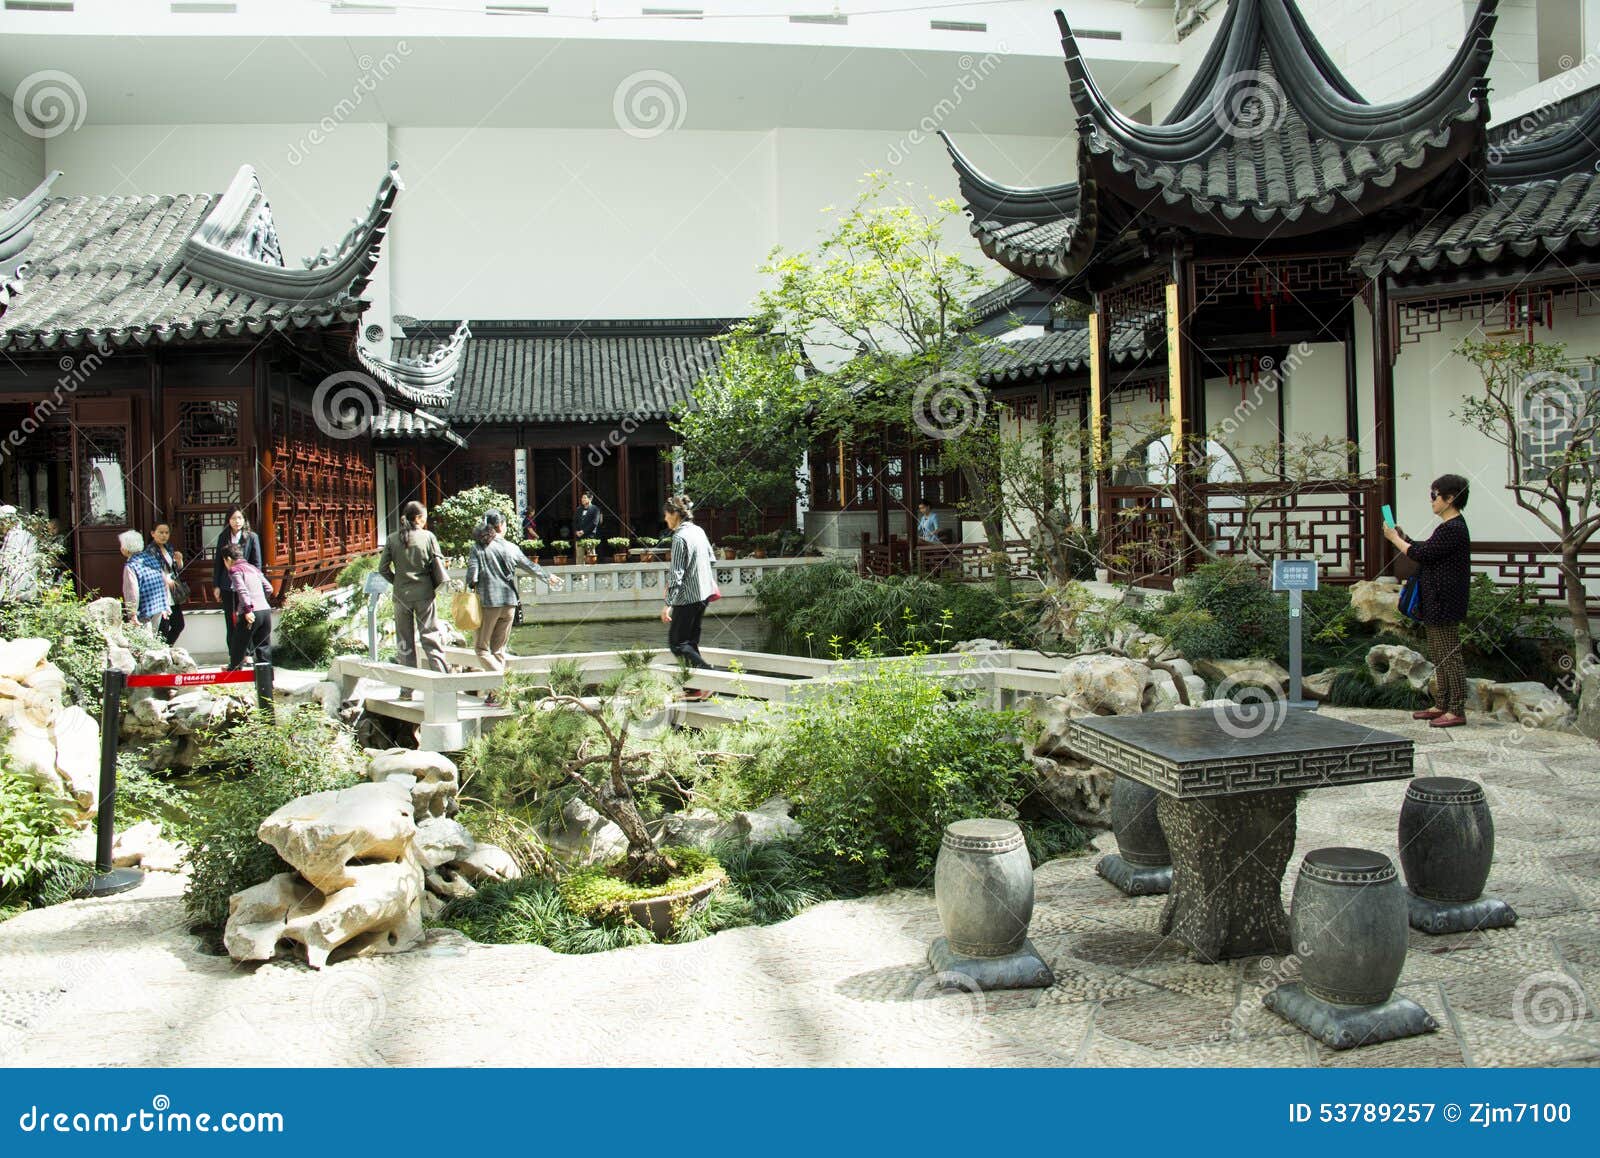 Asia Chinese Beijing China Garden Museum Indoor Courtyard